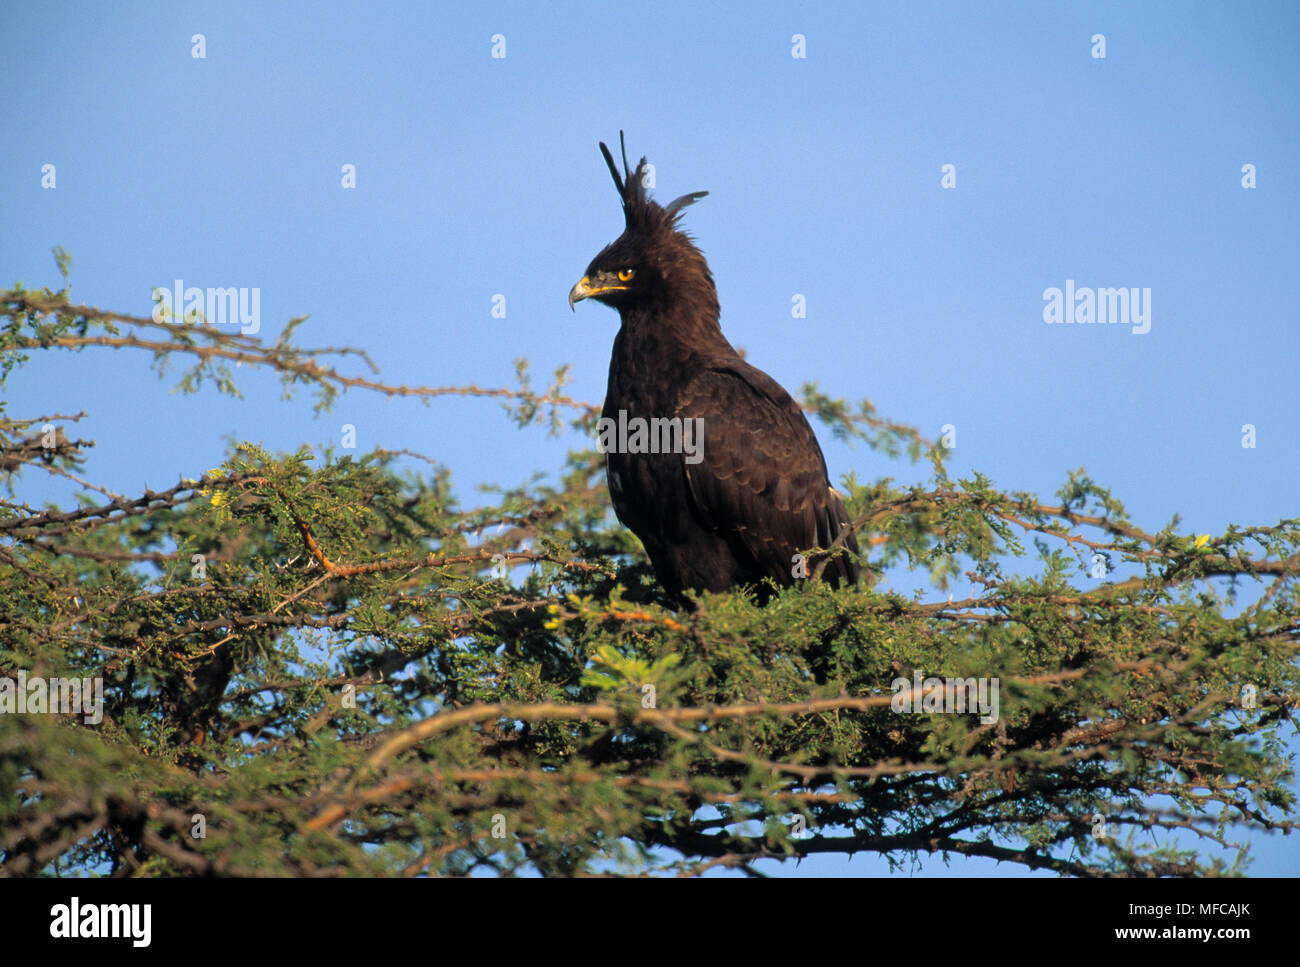 LONG-CRESTED EAGLE Spizaetus occipitalis Masai Mara National Reserve, Kenya. Stock Photo